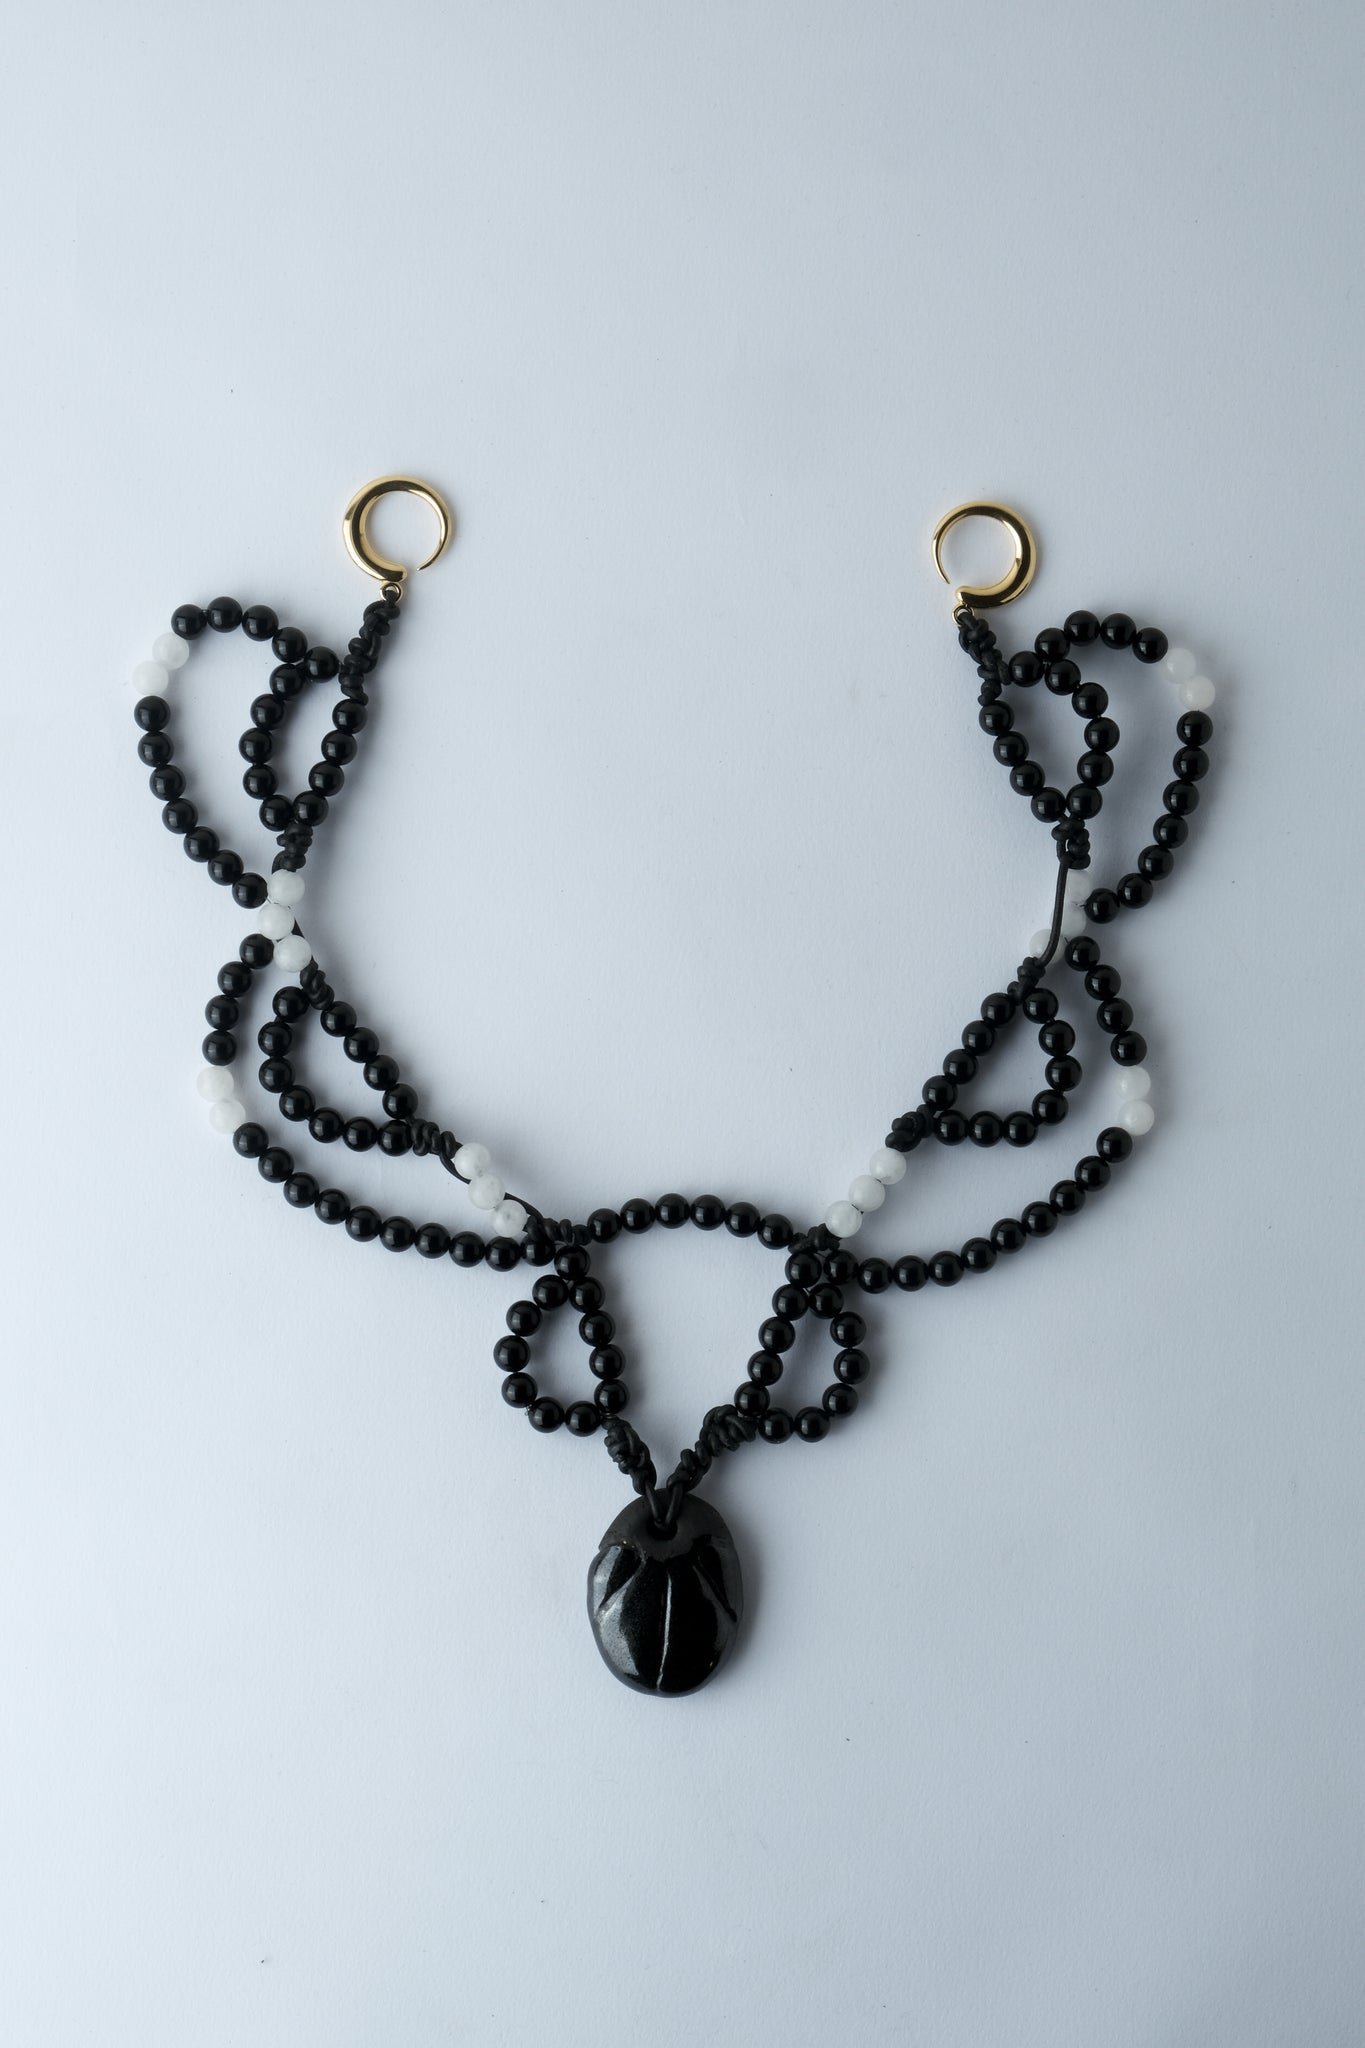 1/1 – Black Plaits Pendant on Onyx and Quartz Beaded Cord